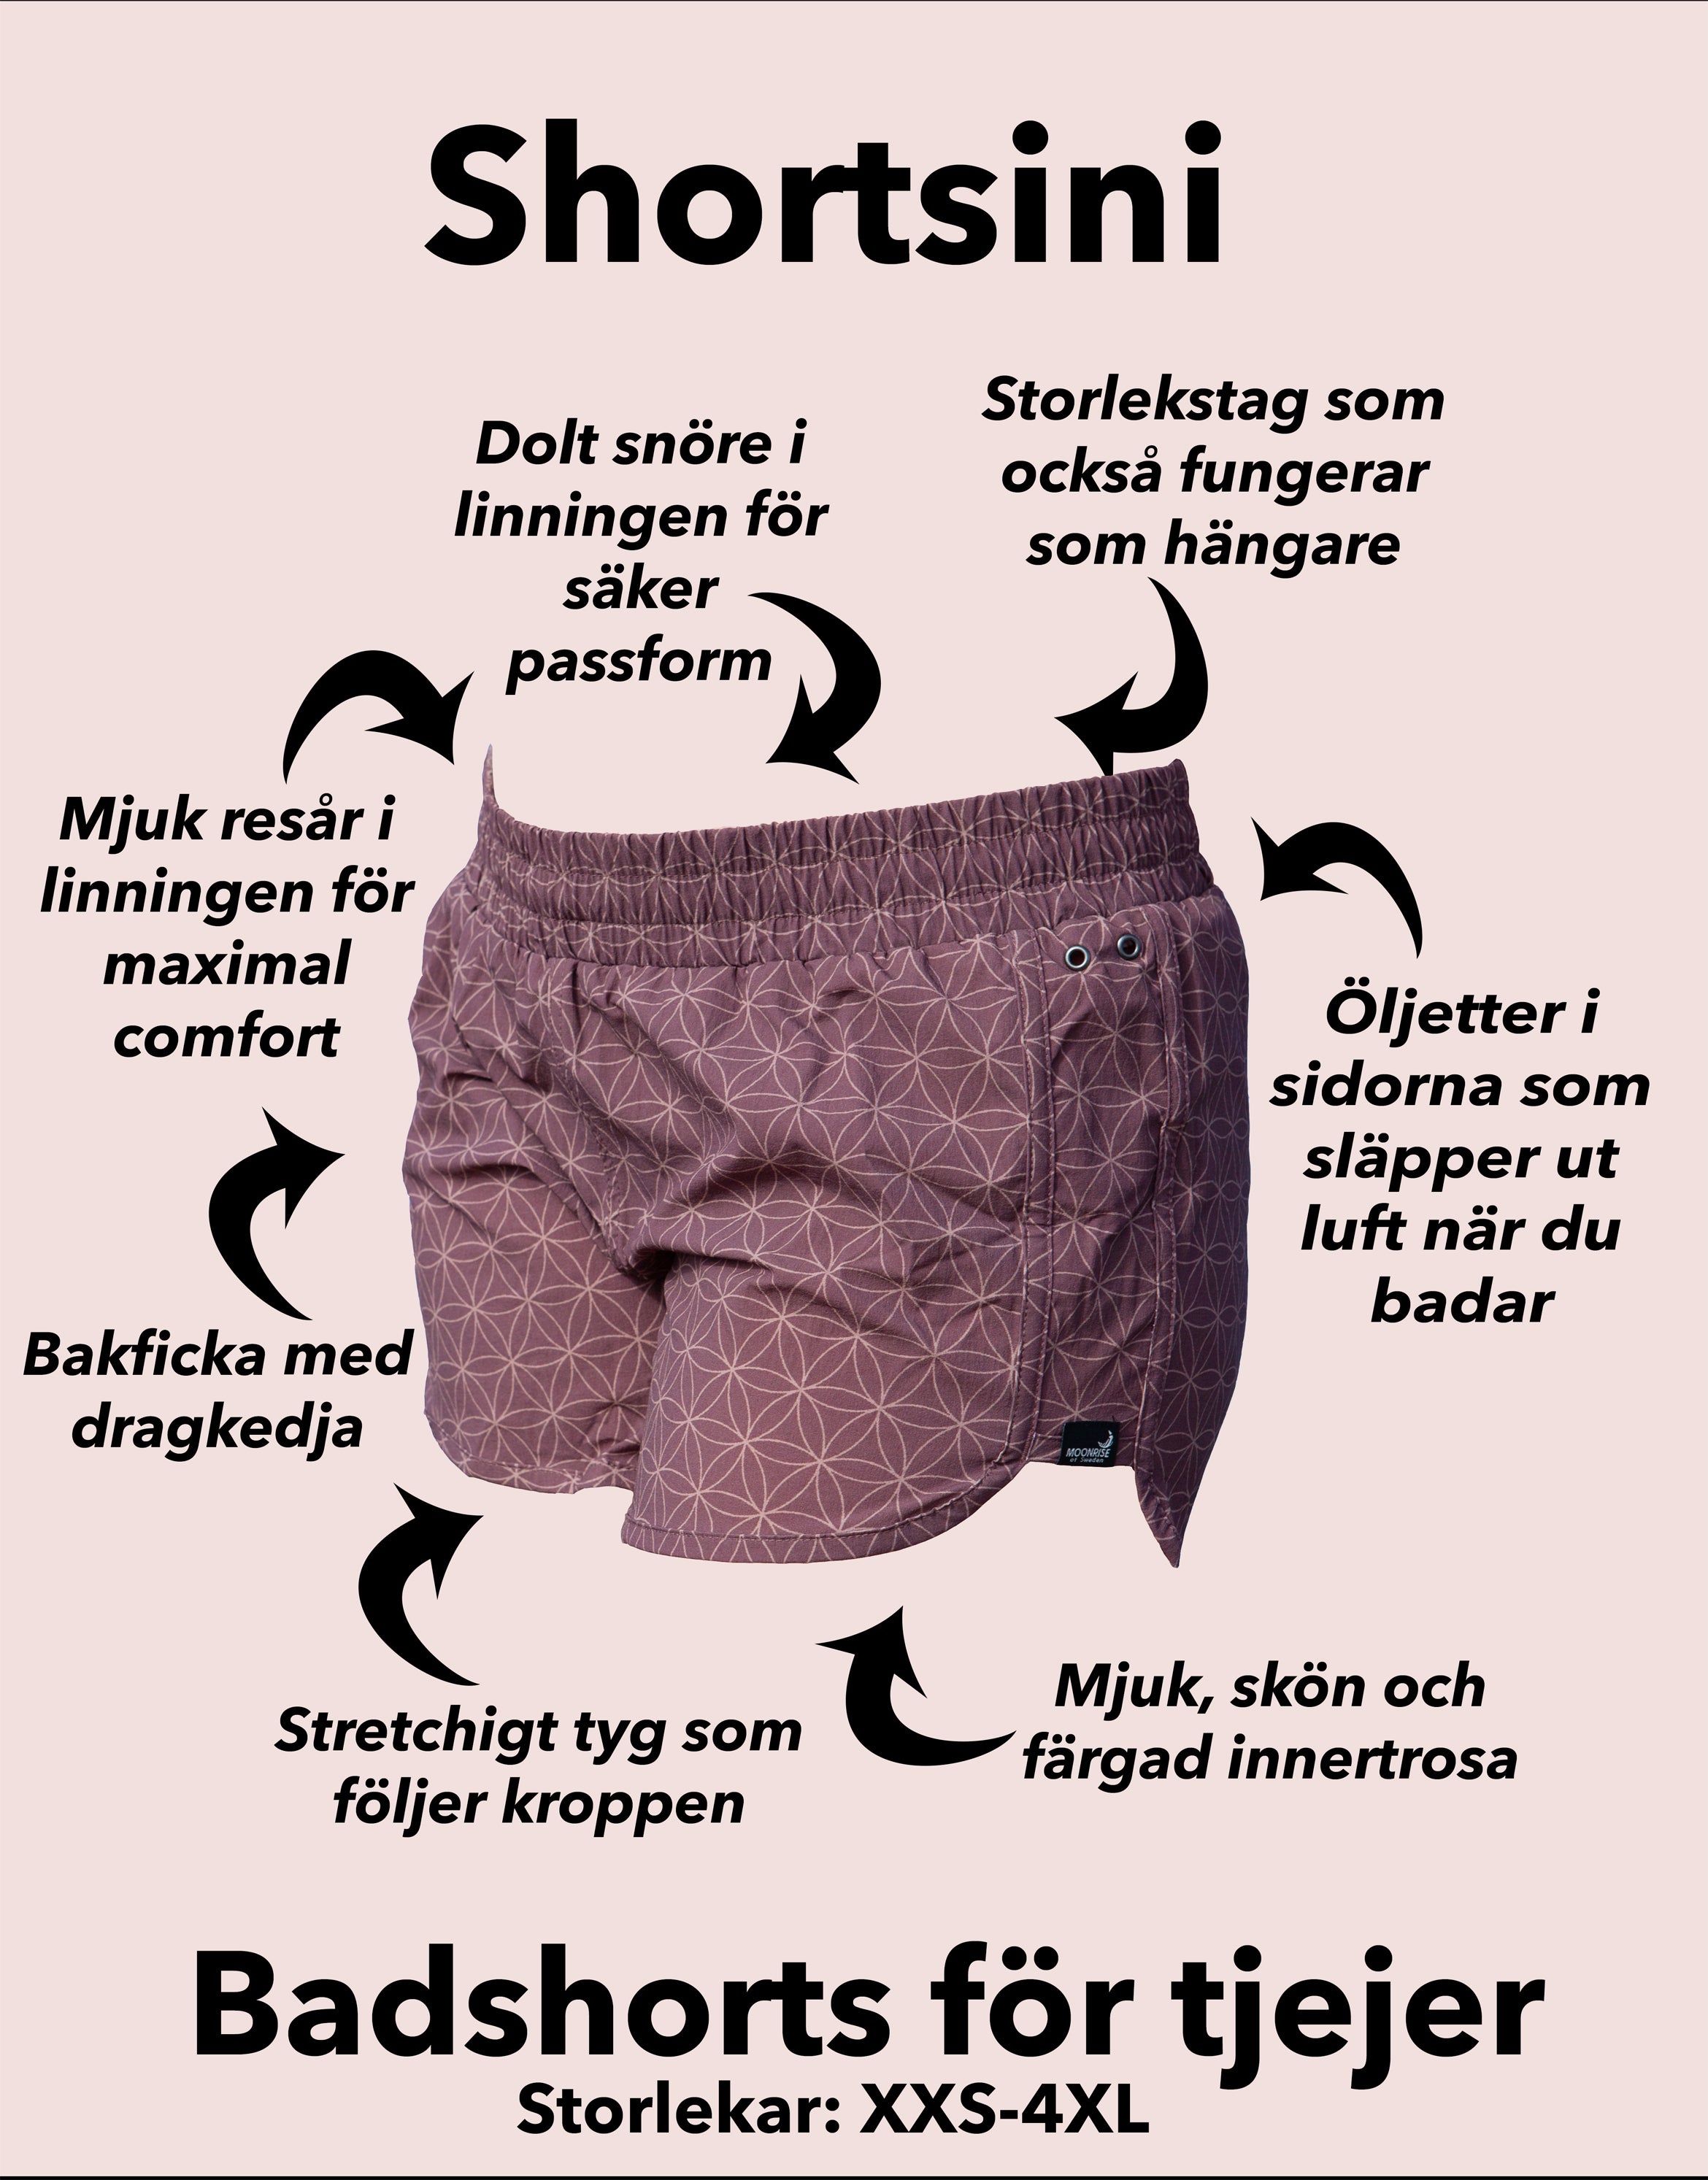 Shortsini badshorts olika funktioner från Moonrise of Sweden